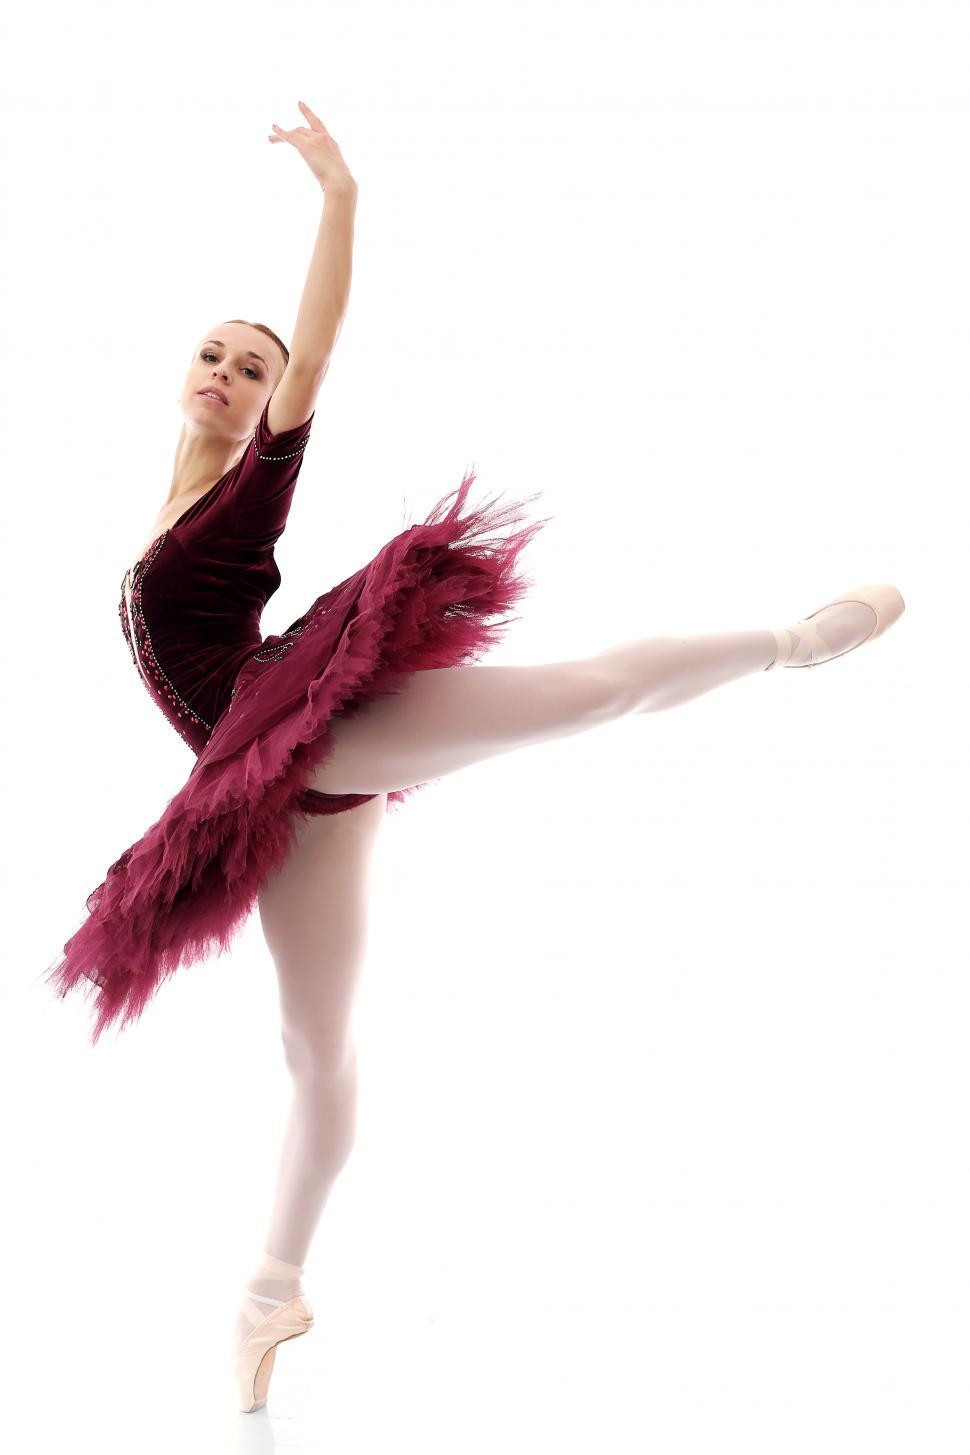 Free Image of Gorgeous ballerina in elegant pose 